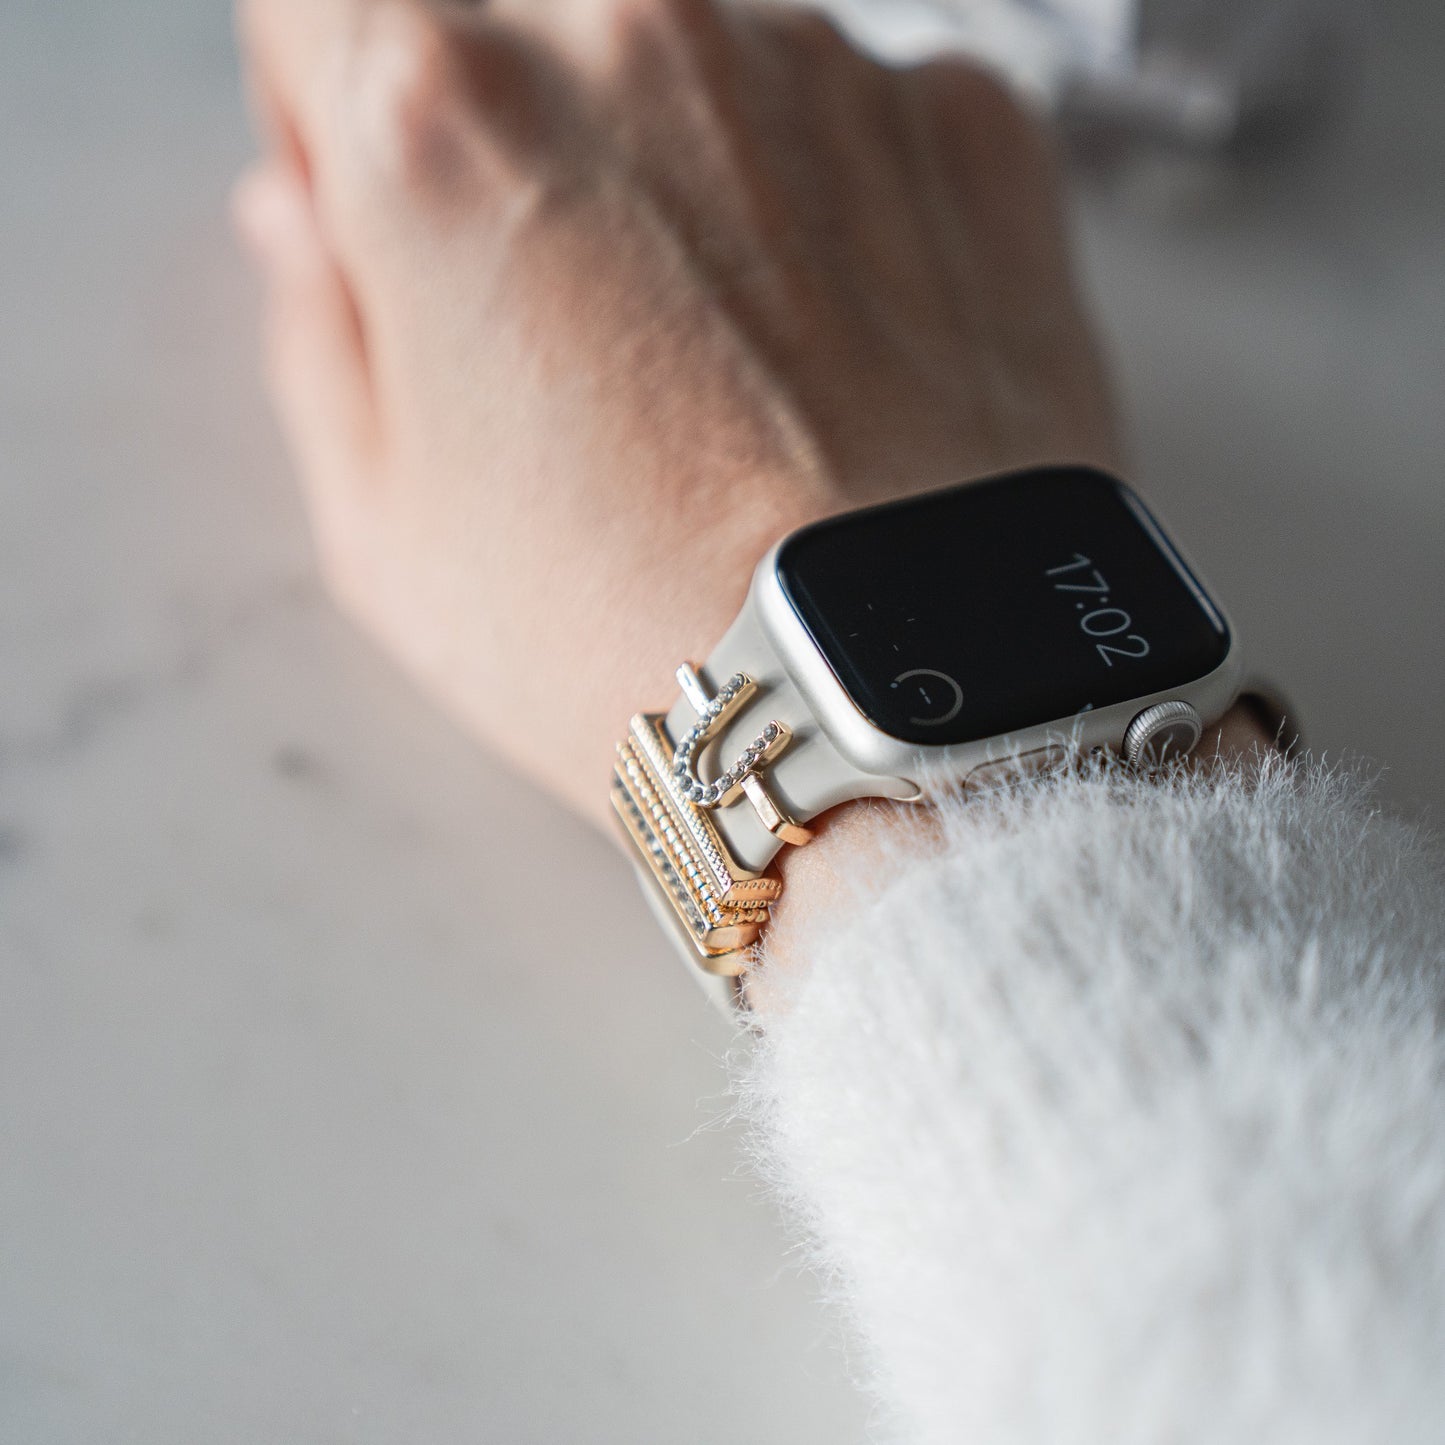 arktisband Apple Watch Charms "U Style"